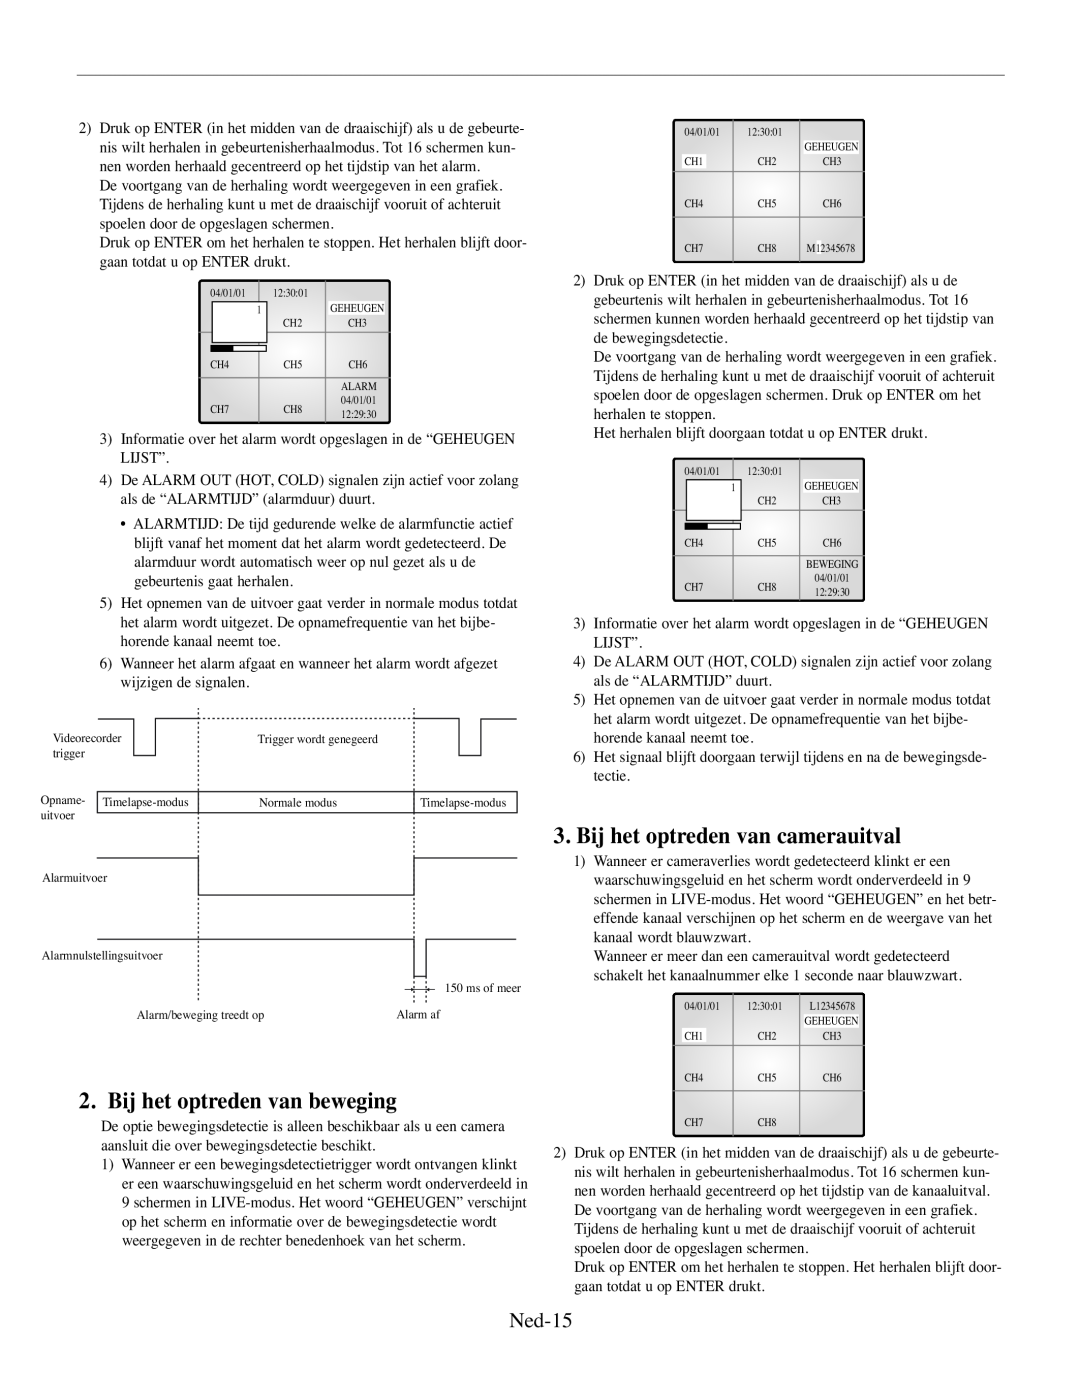 Samsung SMO-210MP/UMG, SMO-210TRP manual Bij het optreden van beweging, Bij het optreden van camerauitval, Ned-15 